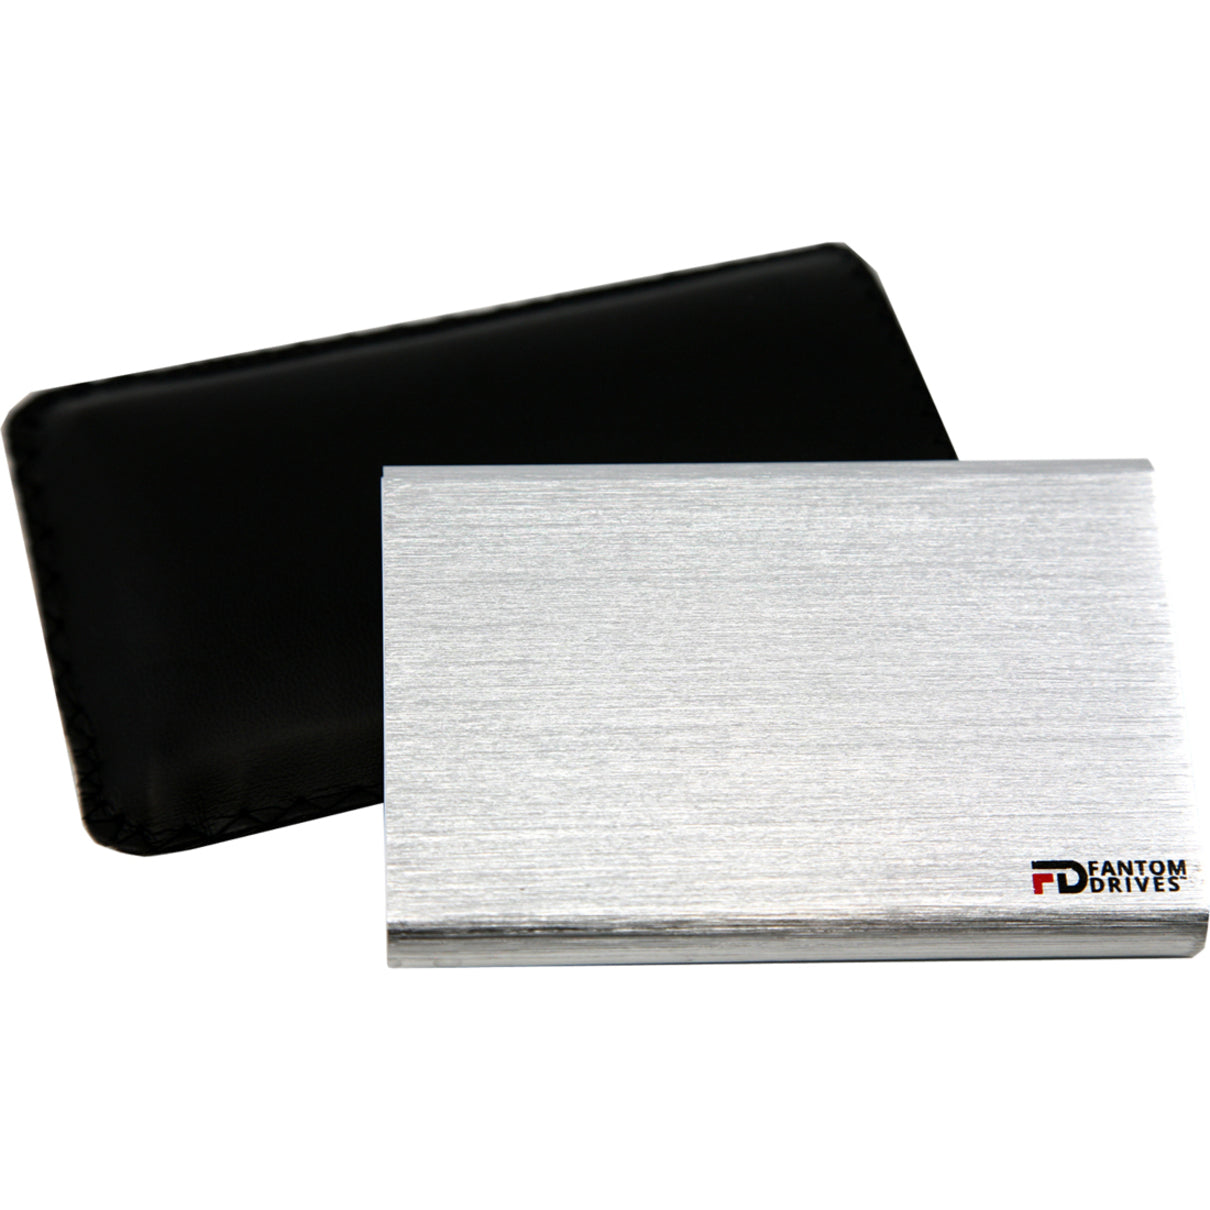 Fantom Drives CSD250S-W GFORCE 3.1 250GB Portable SSD - USB 3.1 Gen 2 Type-C 10Gb/s - Silver, High-Speed External Storage for PC